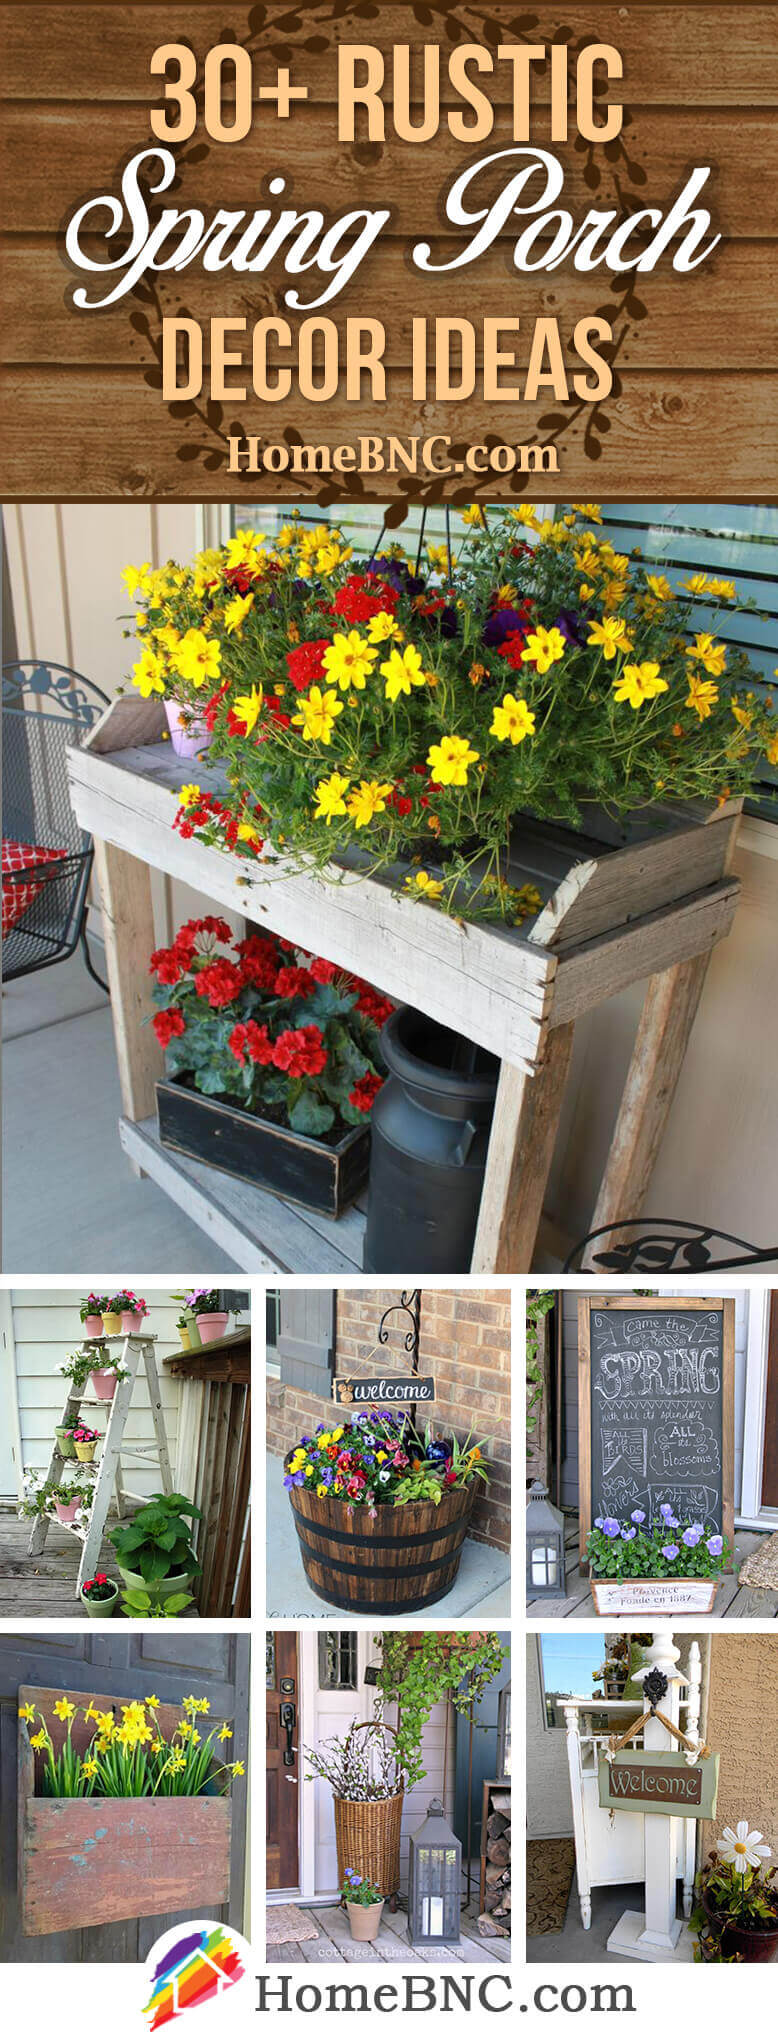 Rustic Spring Porch Decor Ideas